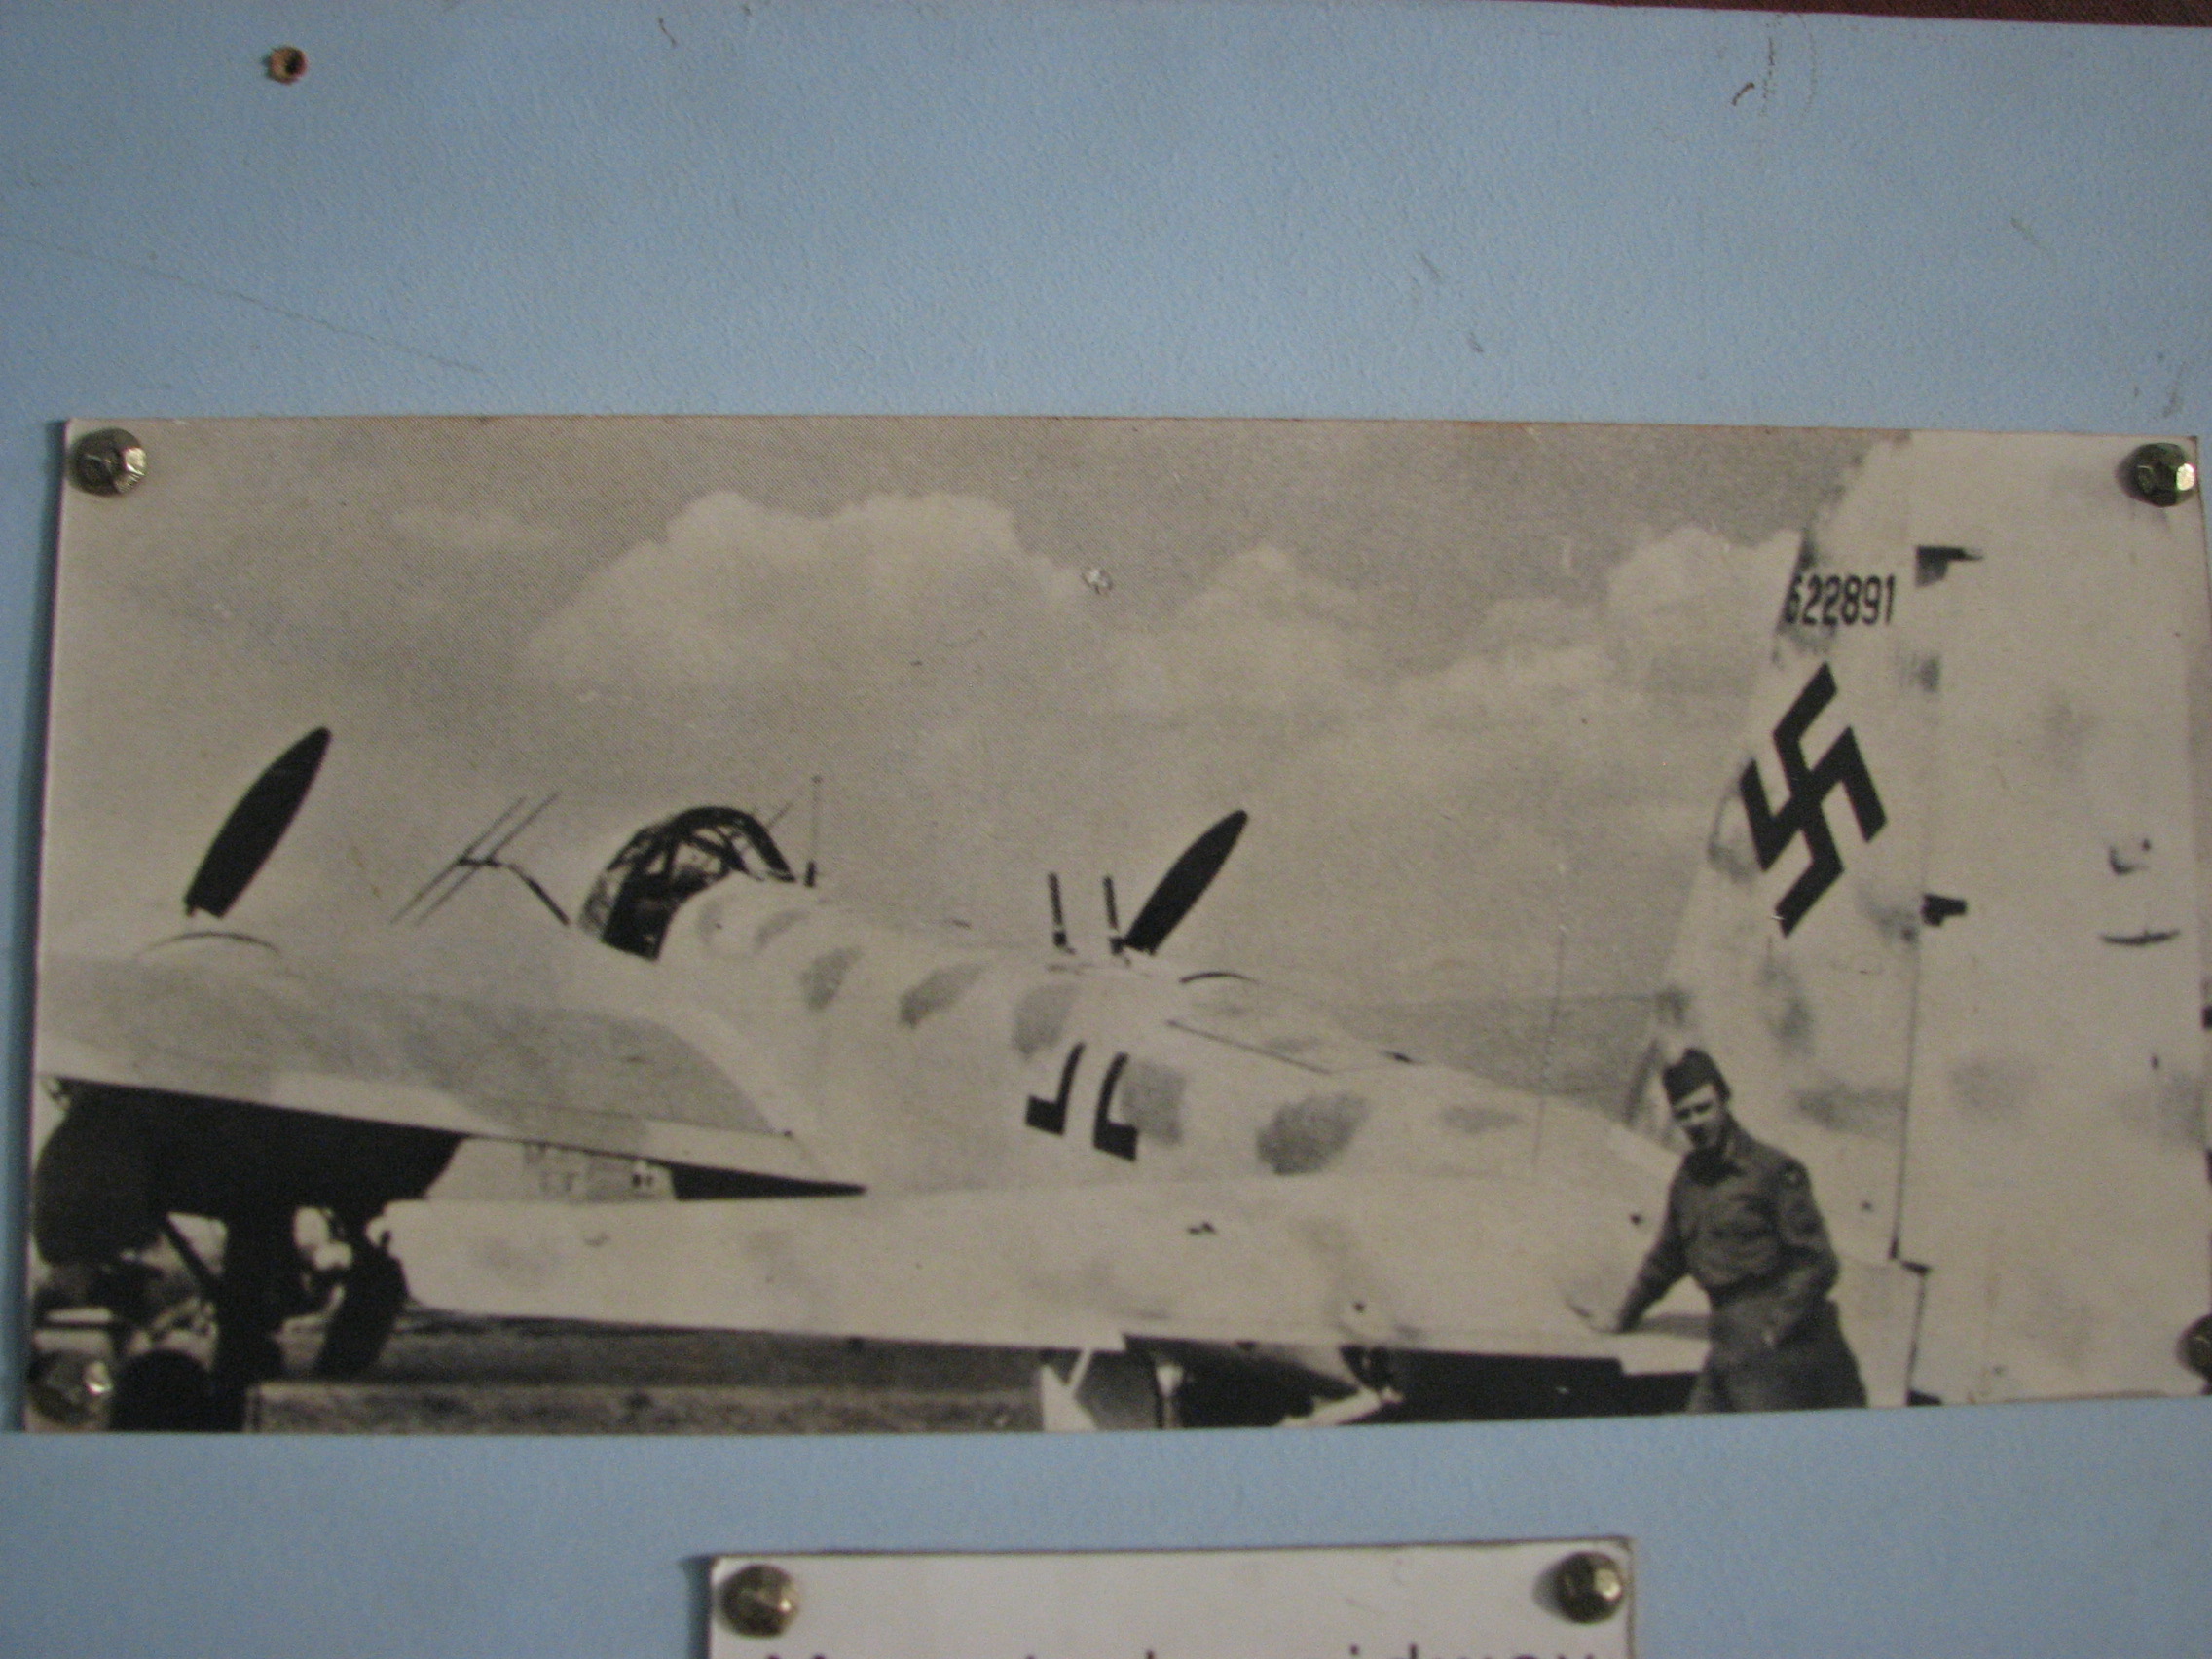 German Ju 88